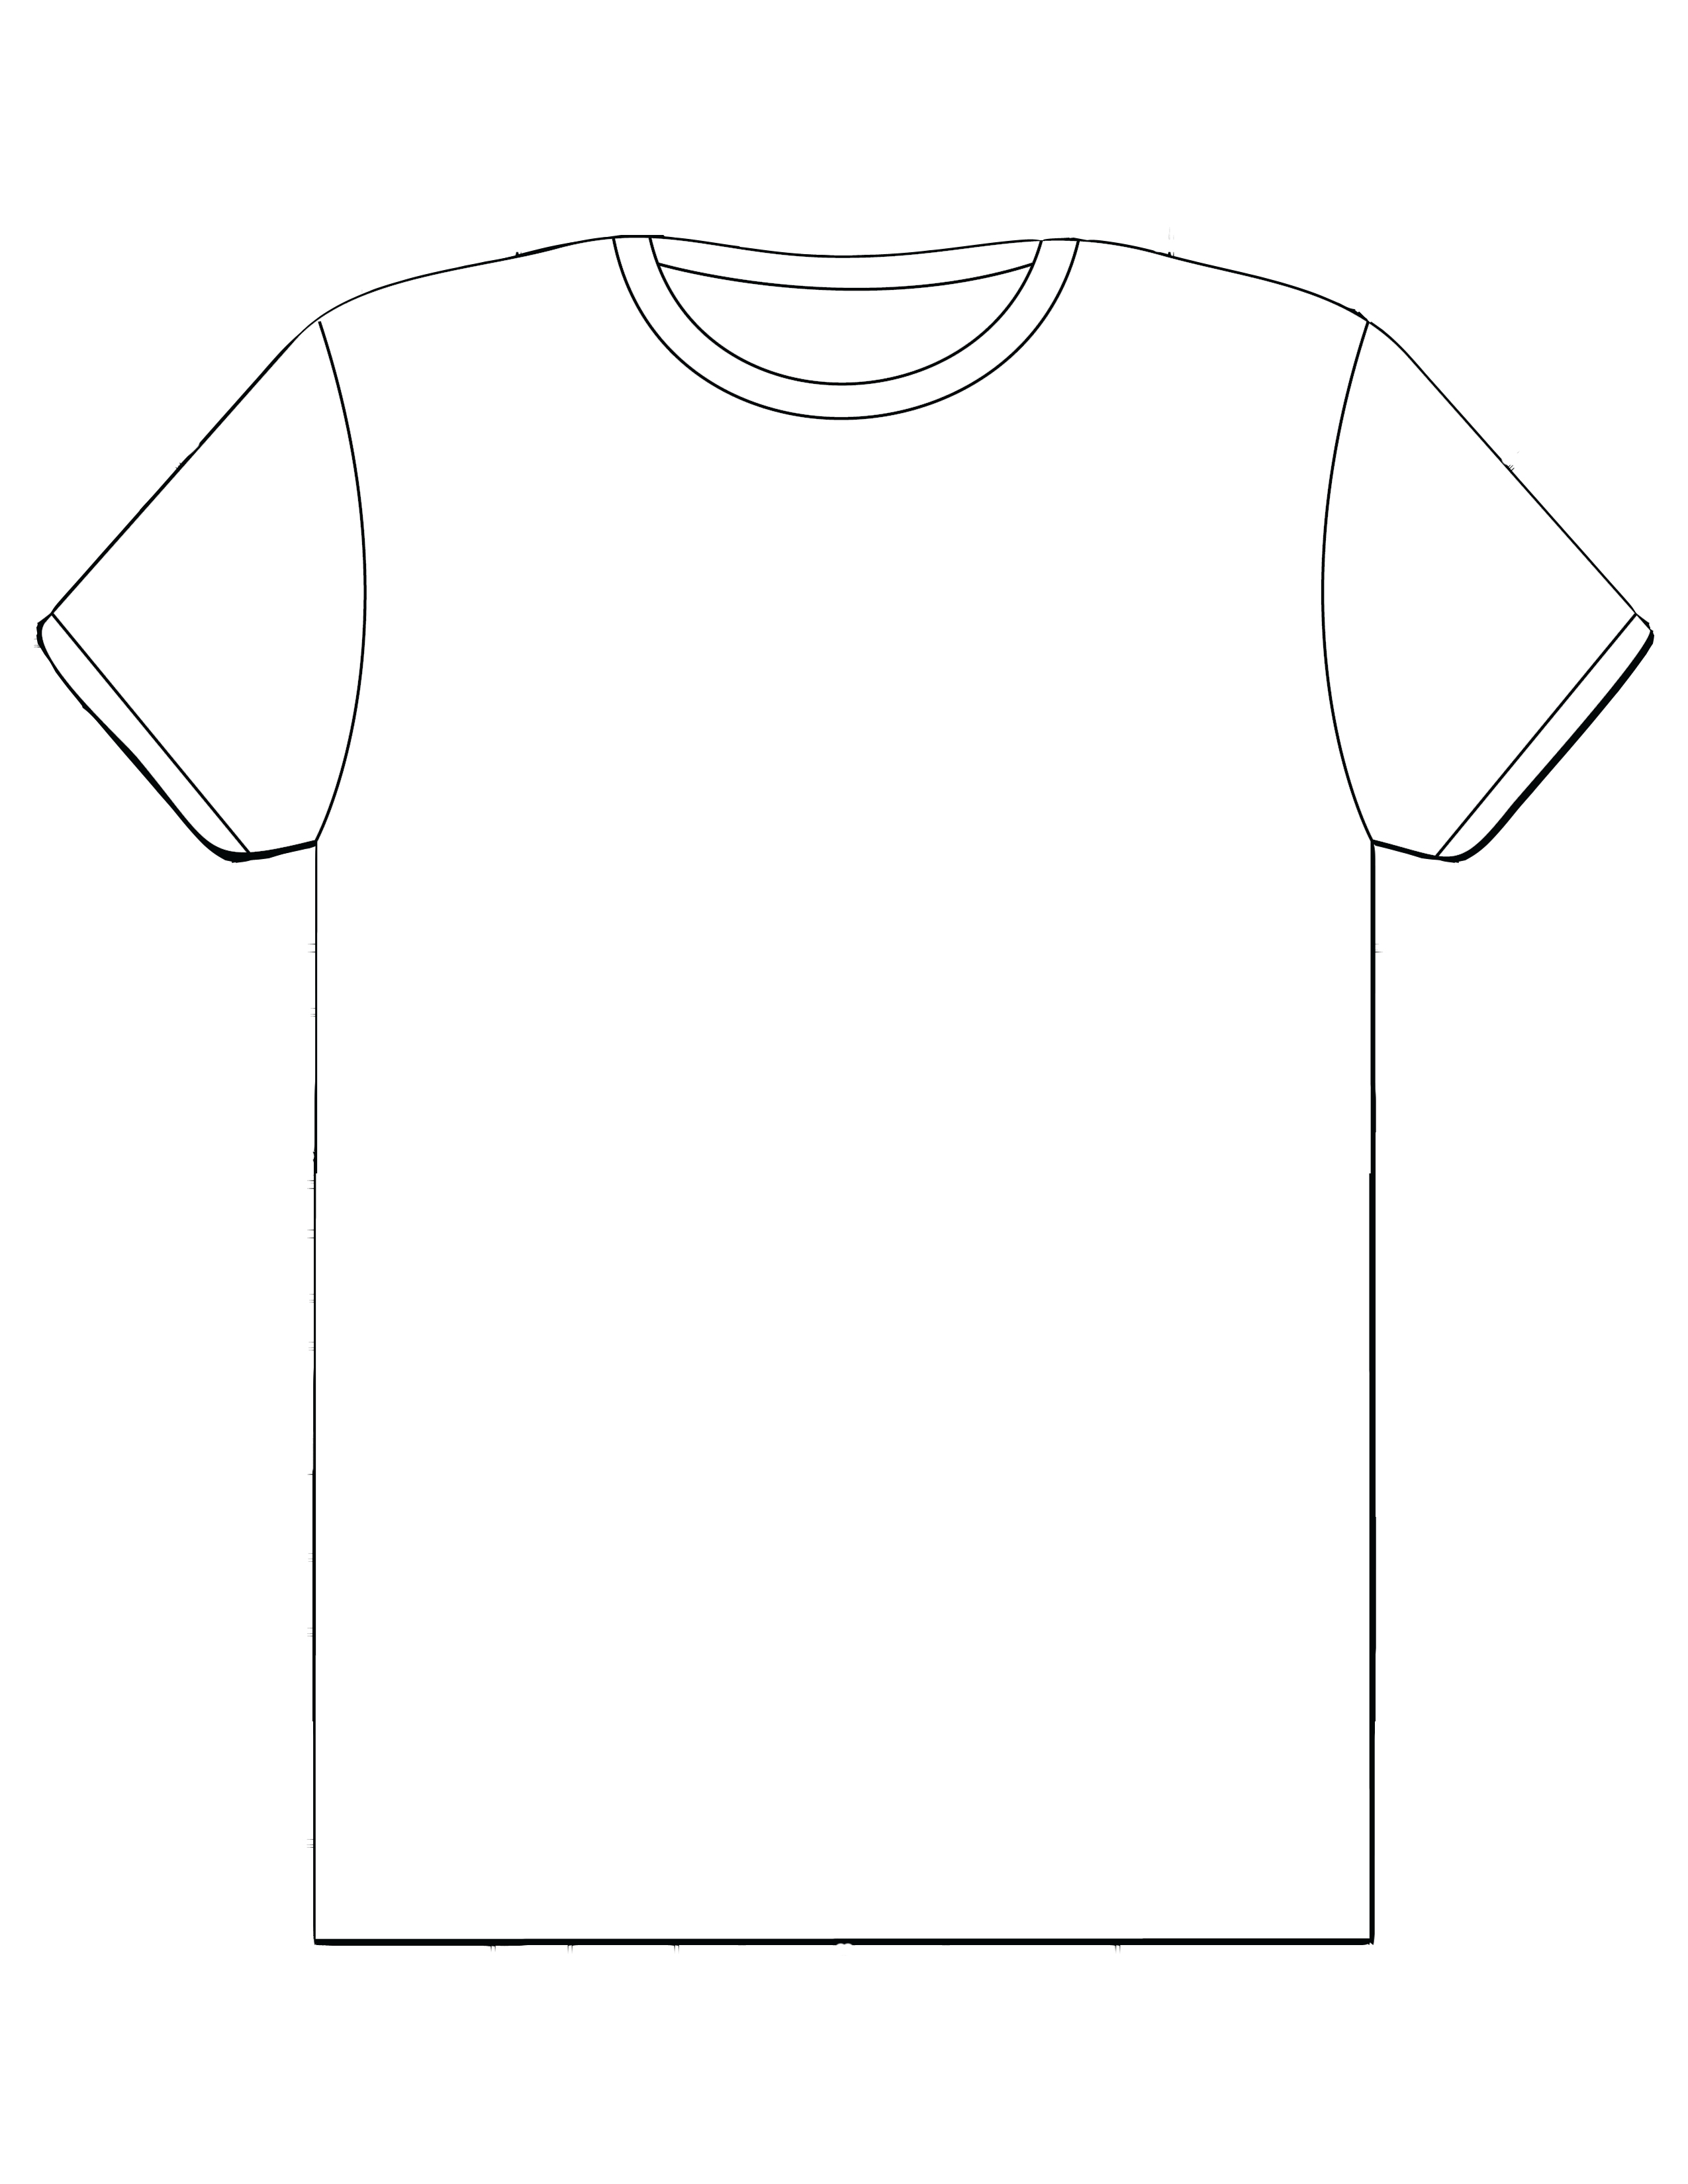 Blank T Shirt